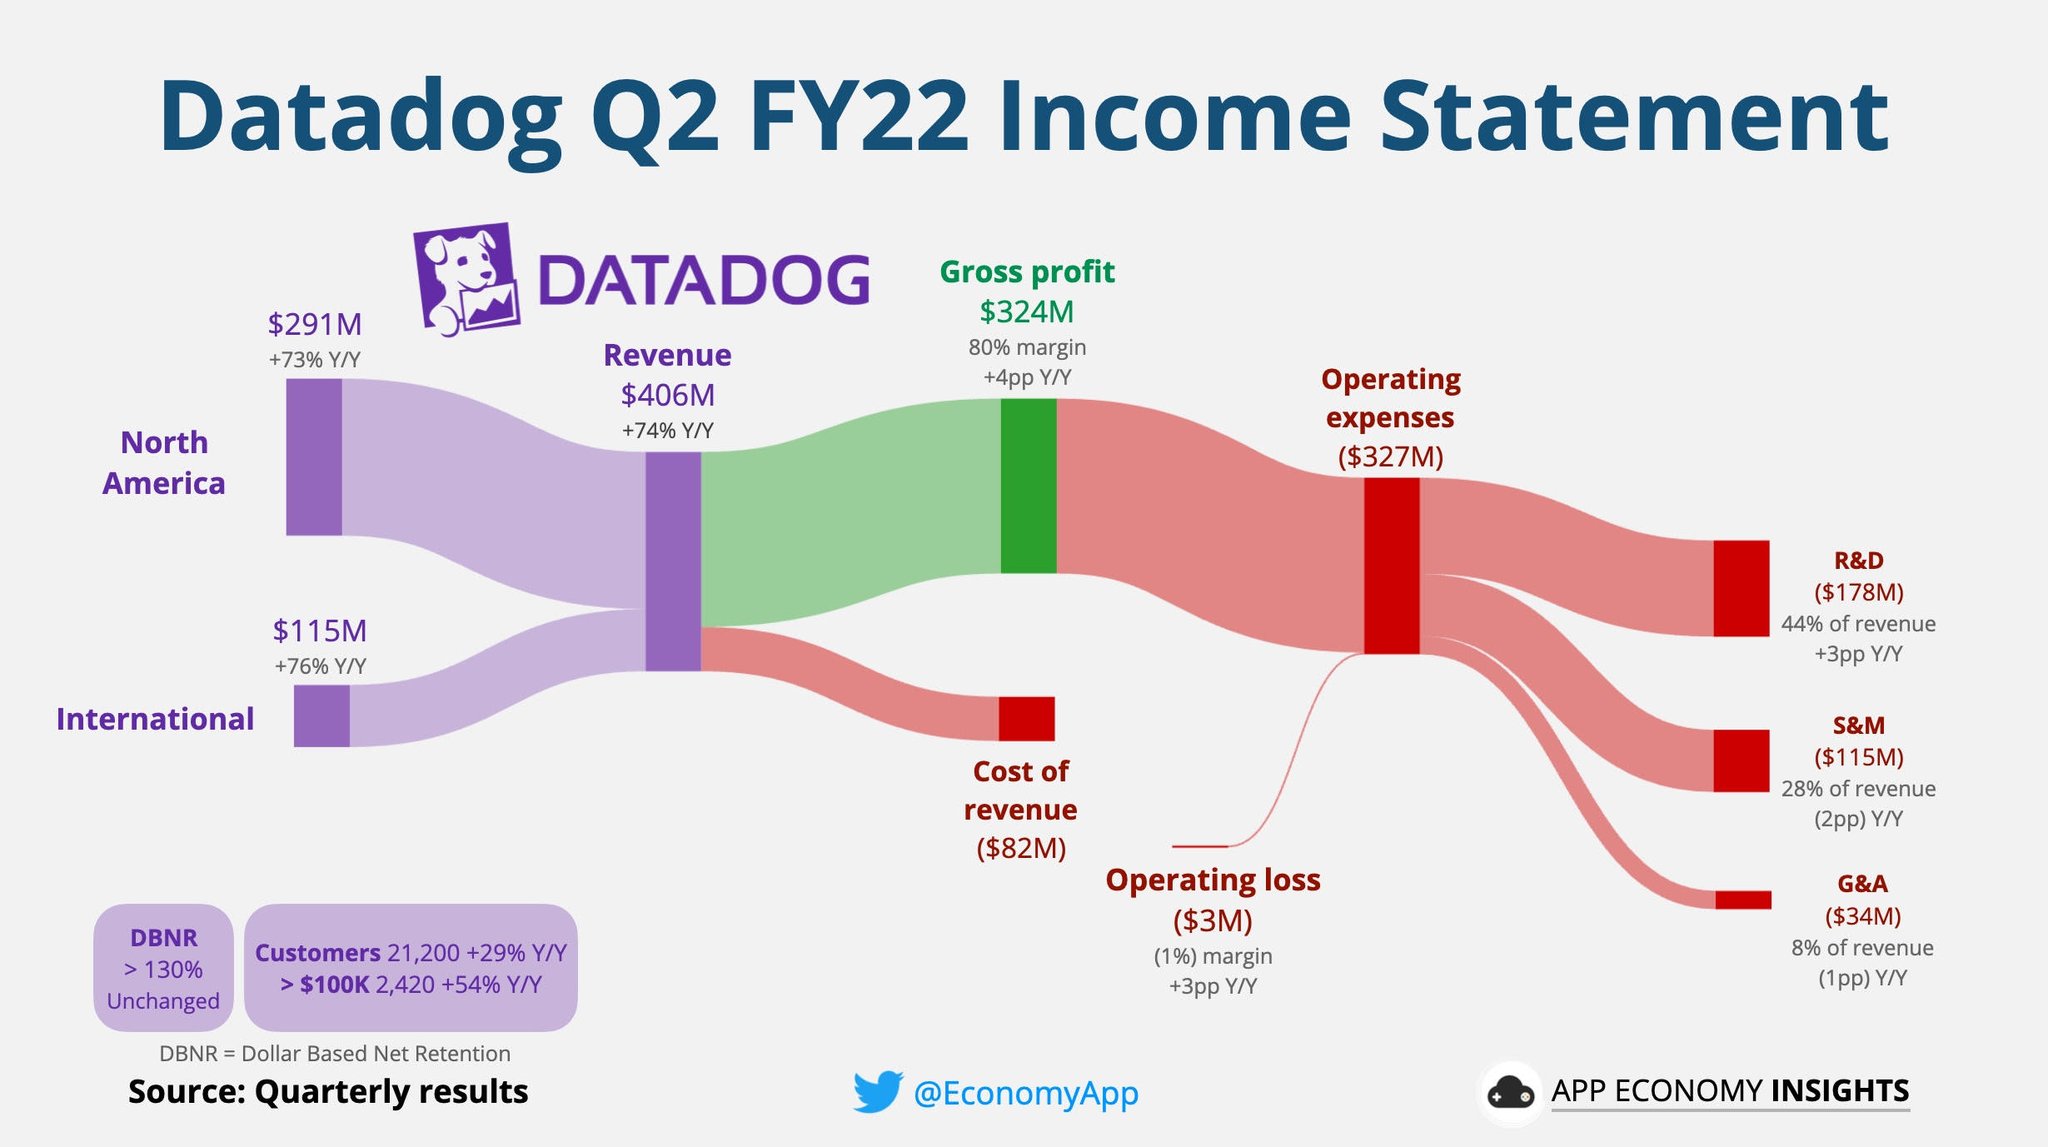 App Economy Insights on Twitter "DDOG Datadog's Statement